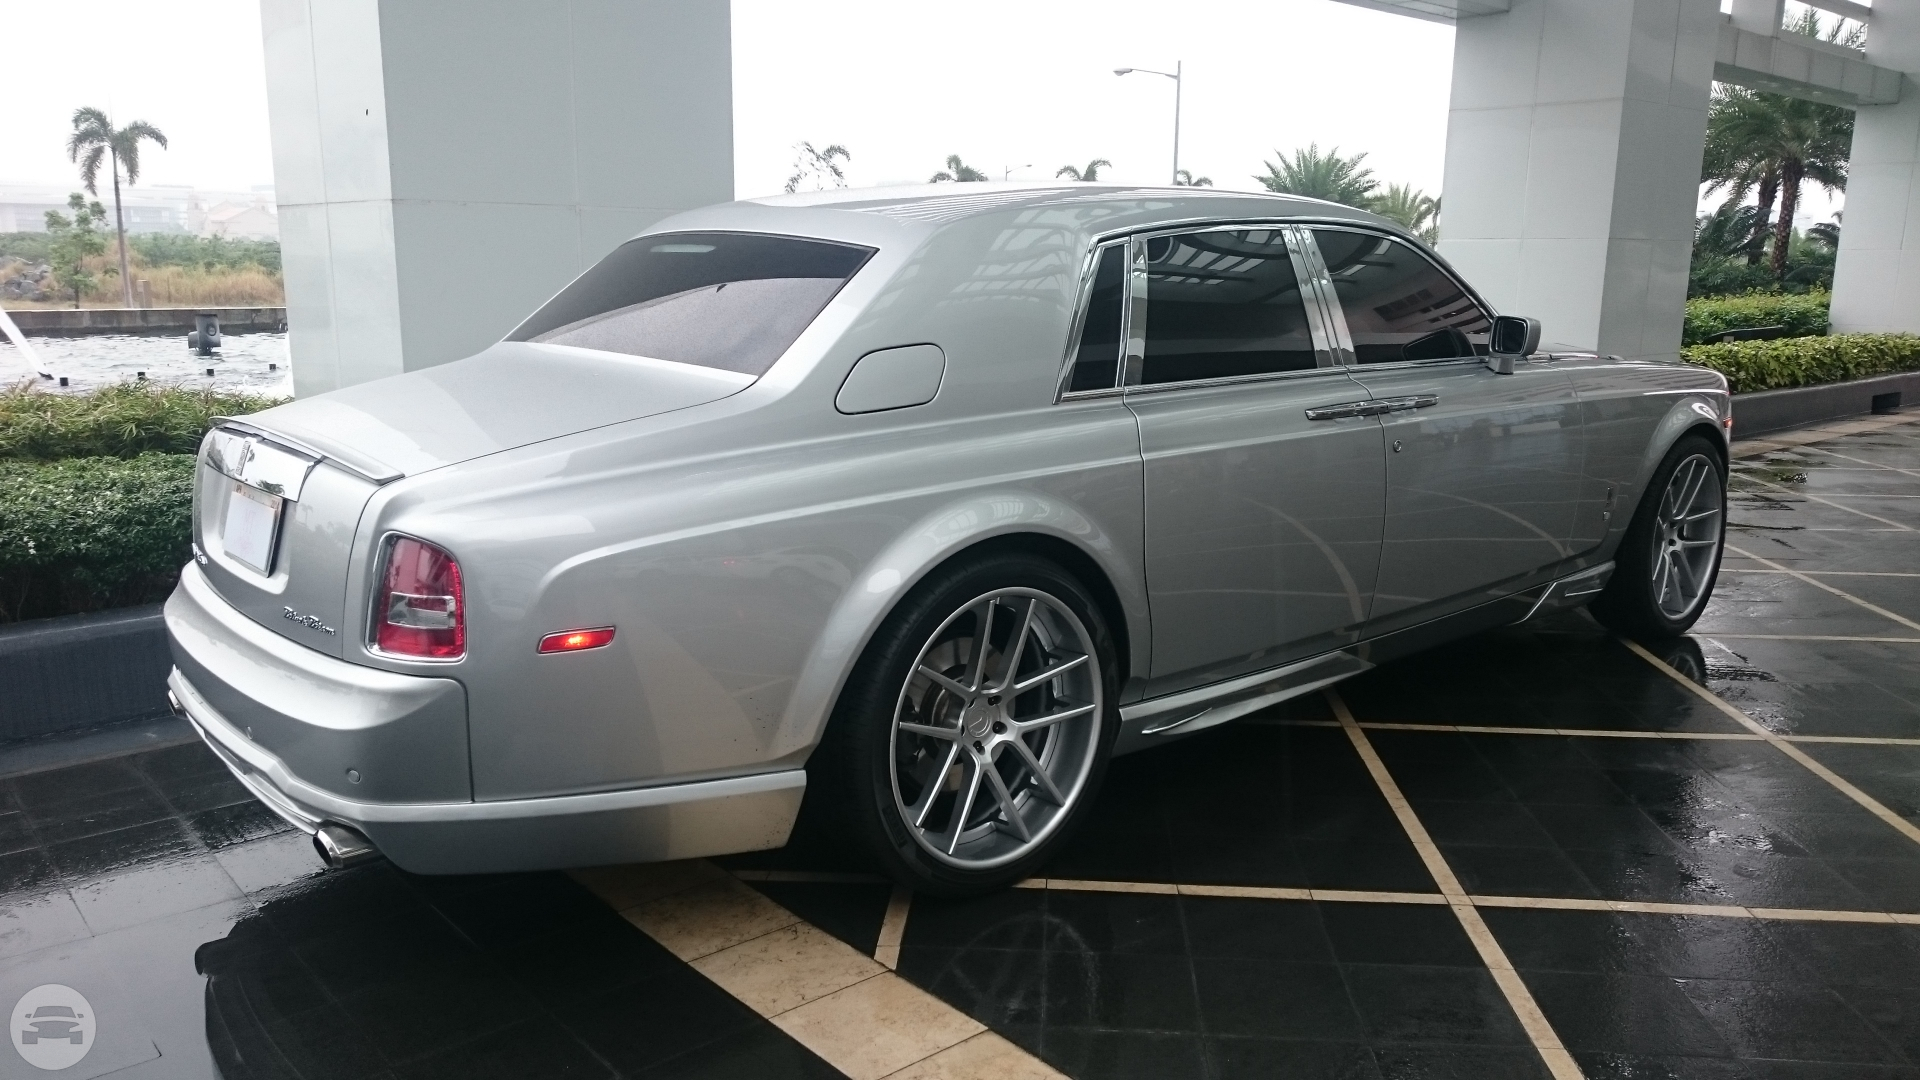 Rolls Royce Phantom Black Bison Edition
Sedan /
Quezon City, Metro Manila

 / Hourly ₱15,000.00
